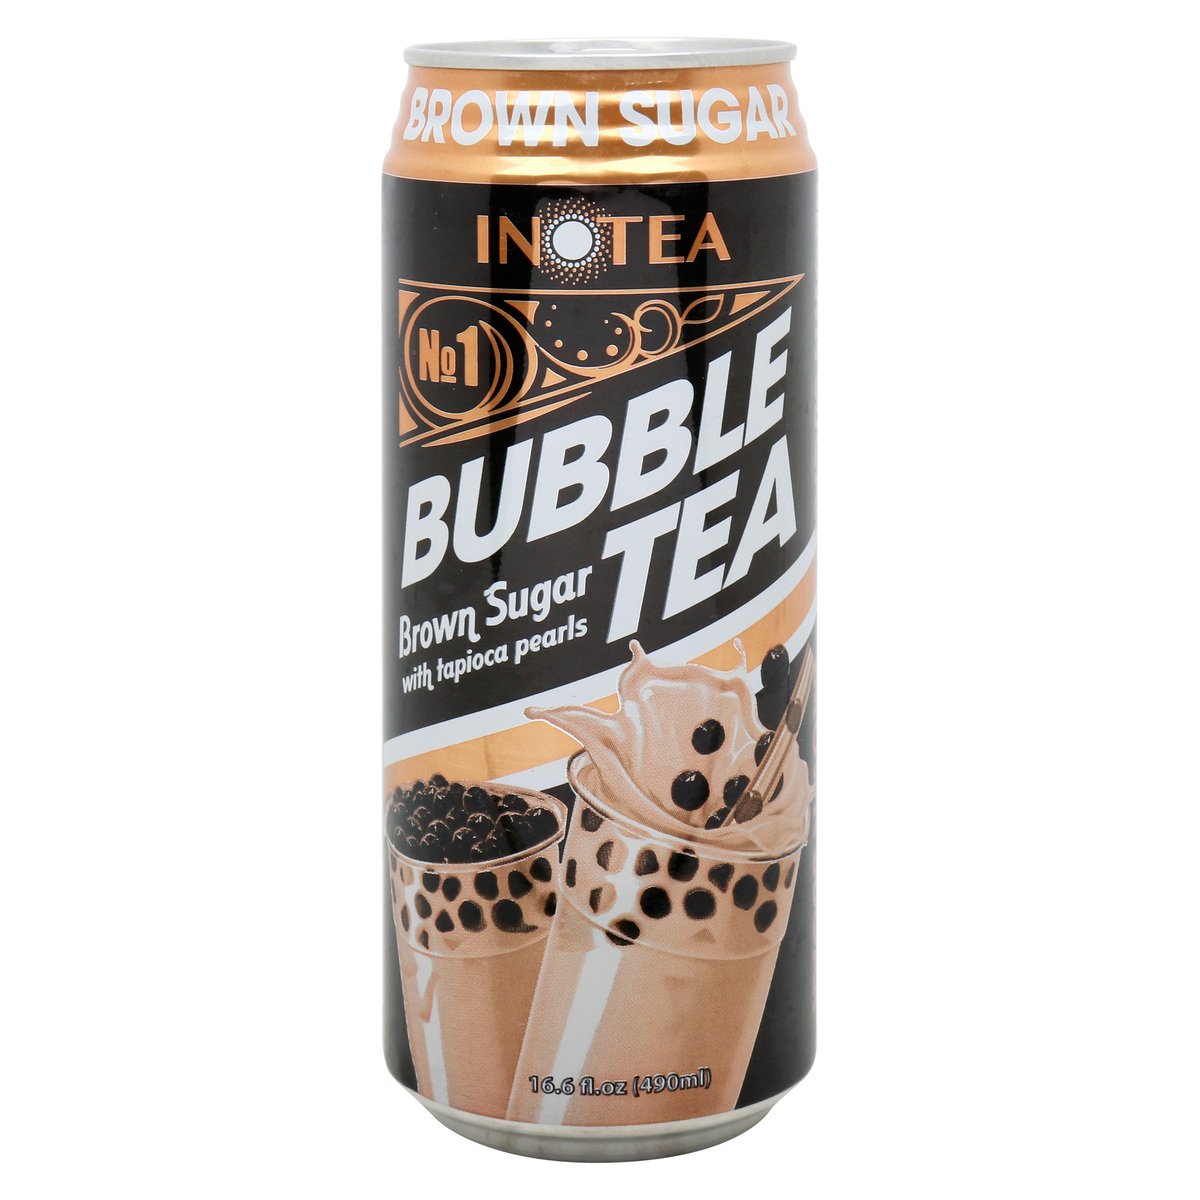 Inotea Bubble Brown Sugar Tea with Tapioca Pearls, 490 ml